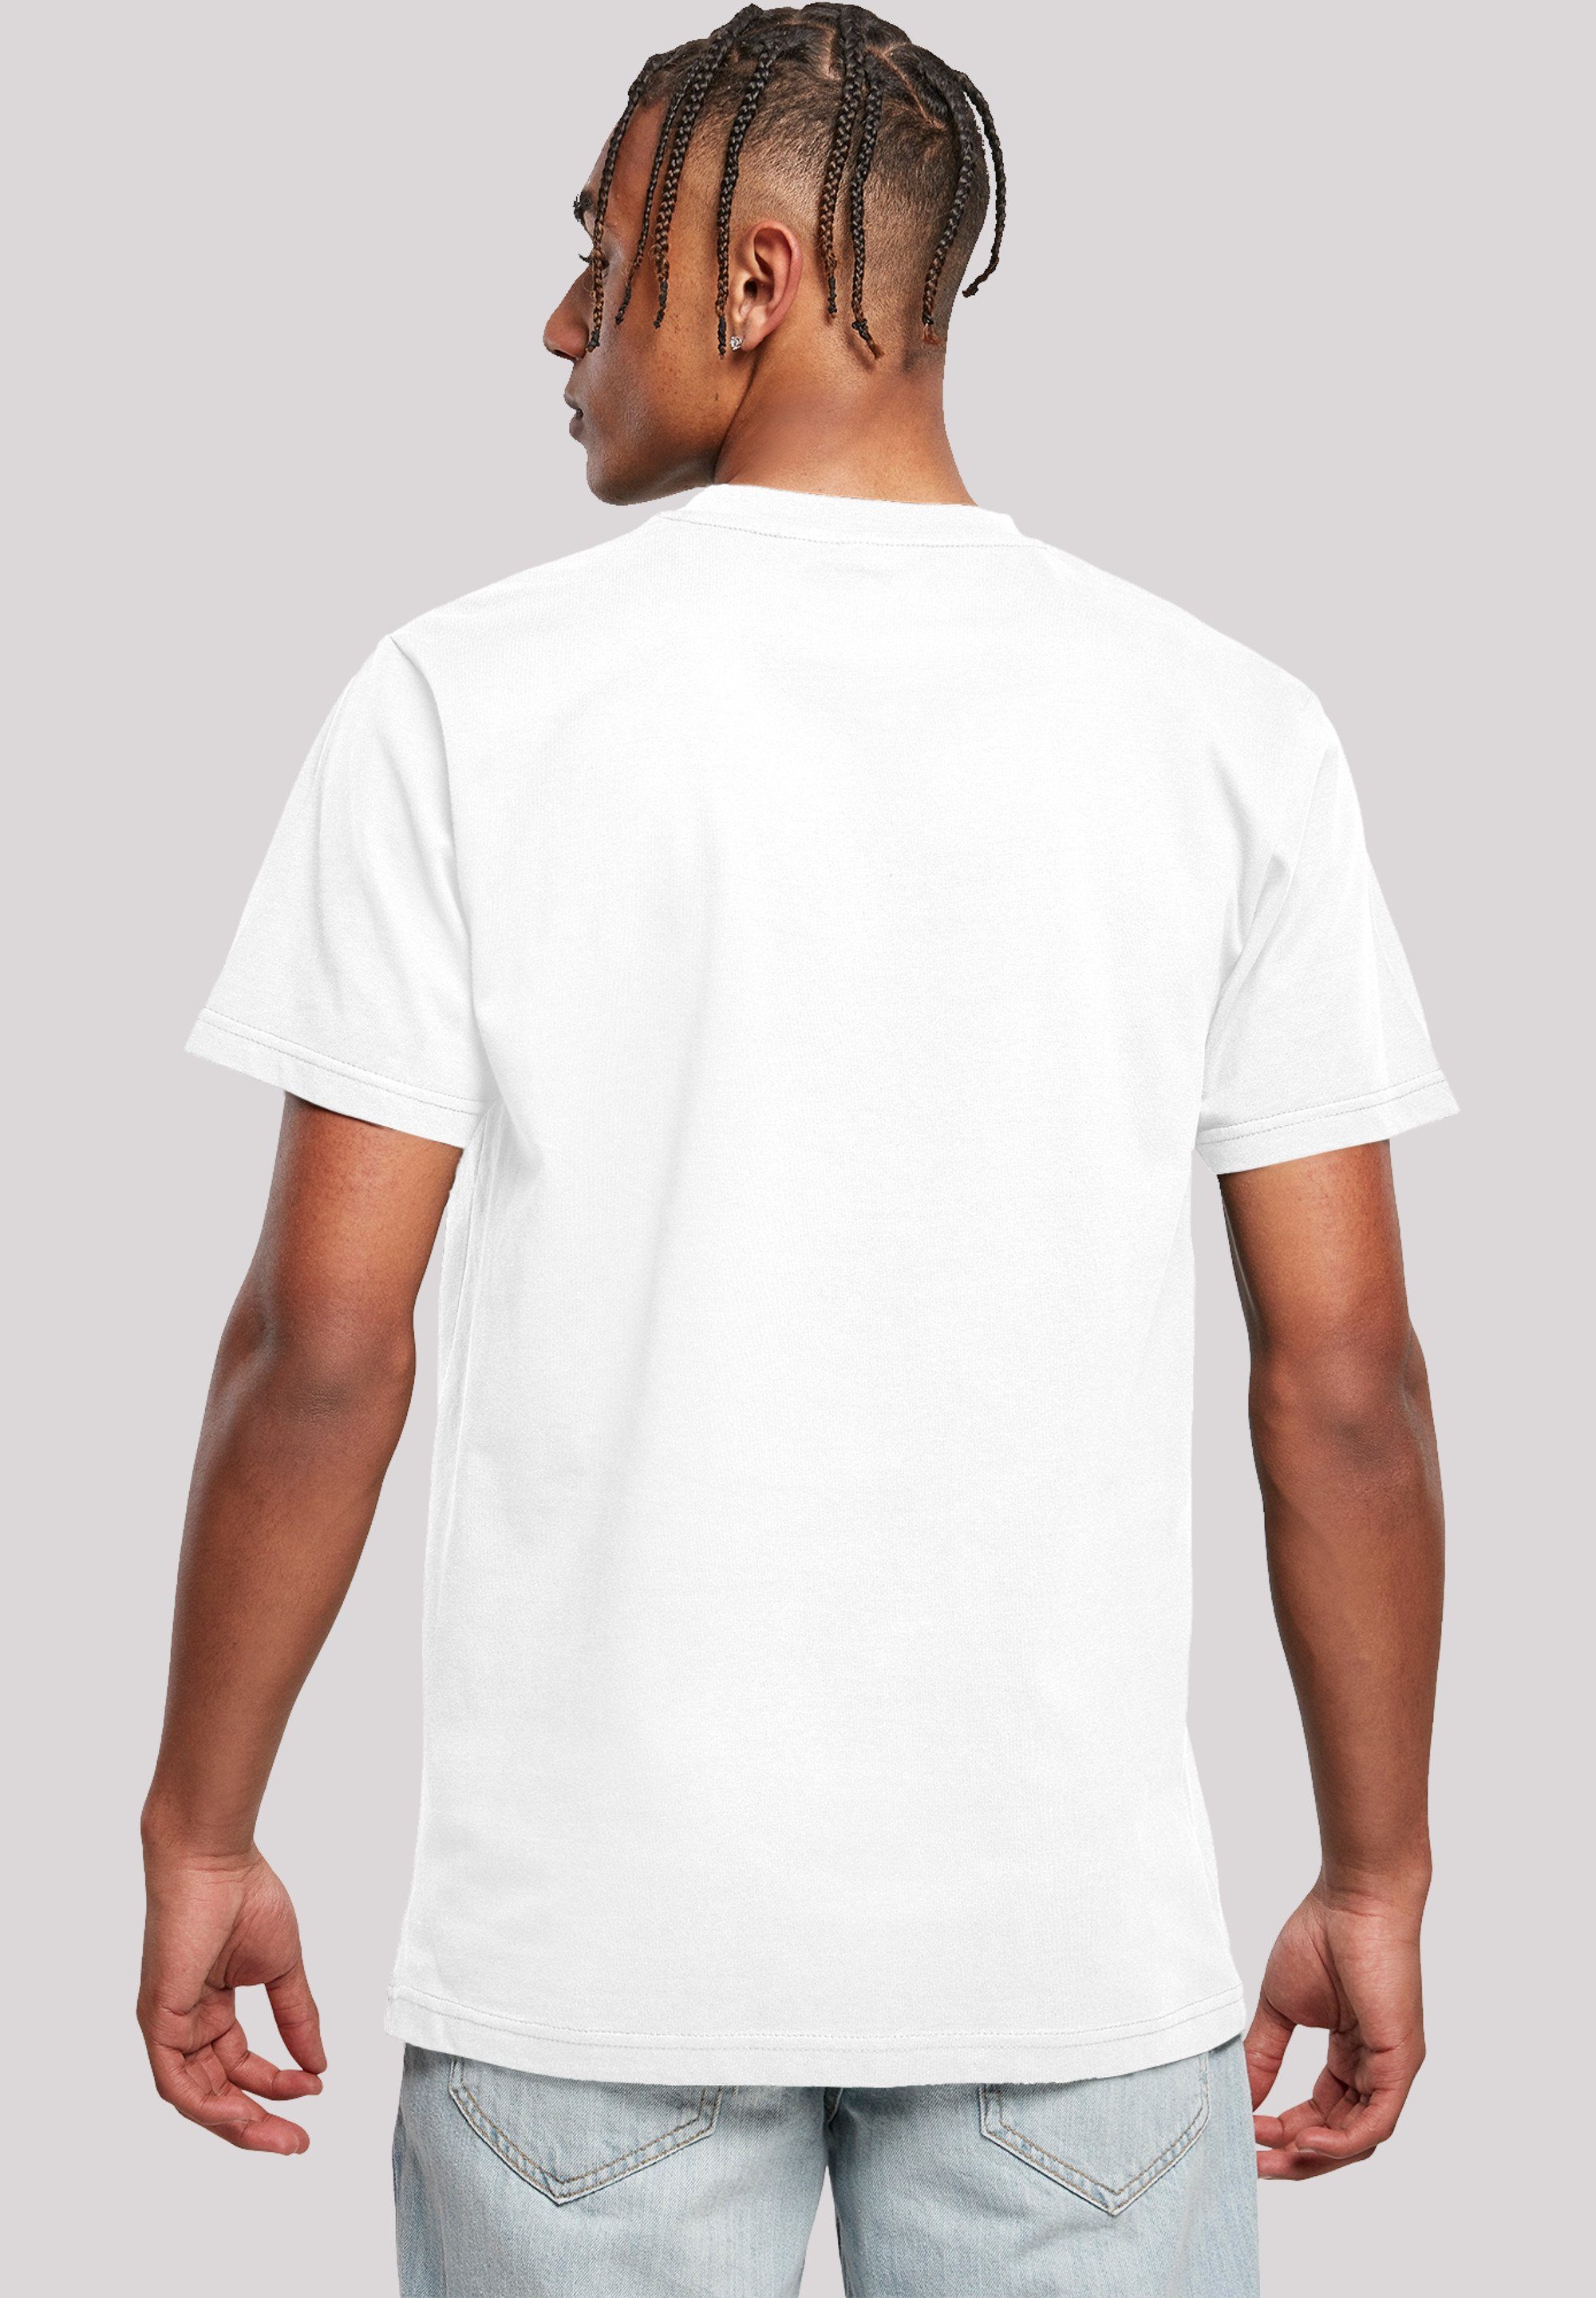 Herren,Premium Genesis T-Shirt 45 F4NT4STIC All weiß Merch,Regular-Fit,Basic,Bandshirt Rockband That's